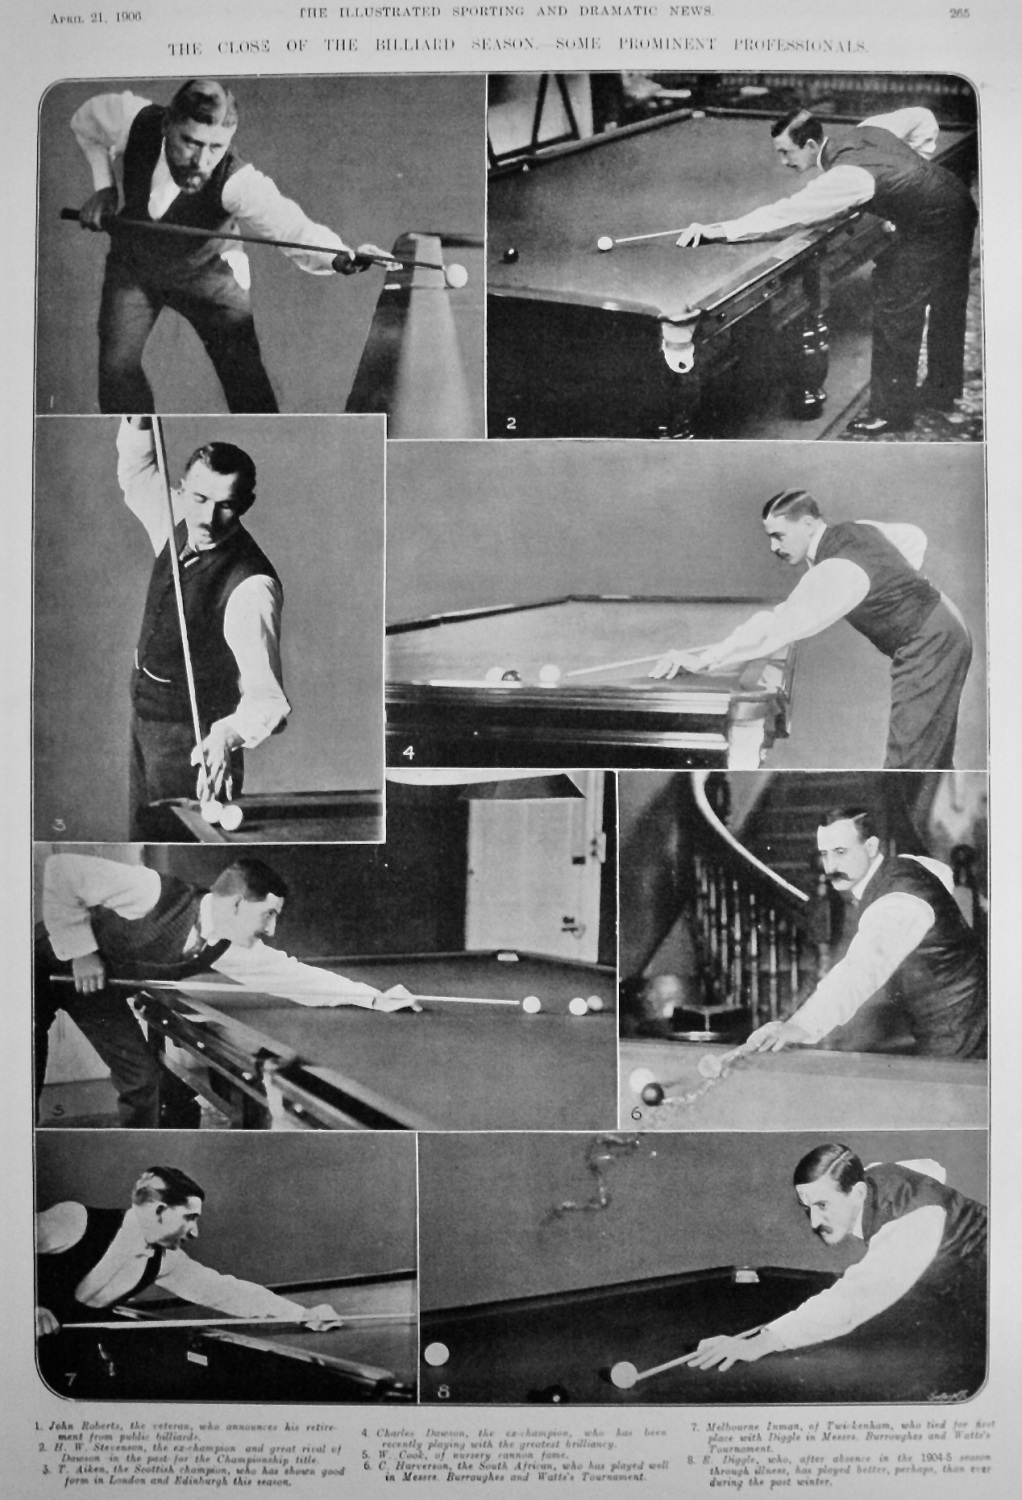 The Close of the Billiard Season.- Some Prominent Professionals.  1906.